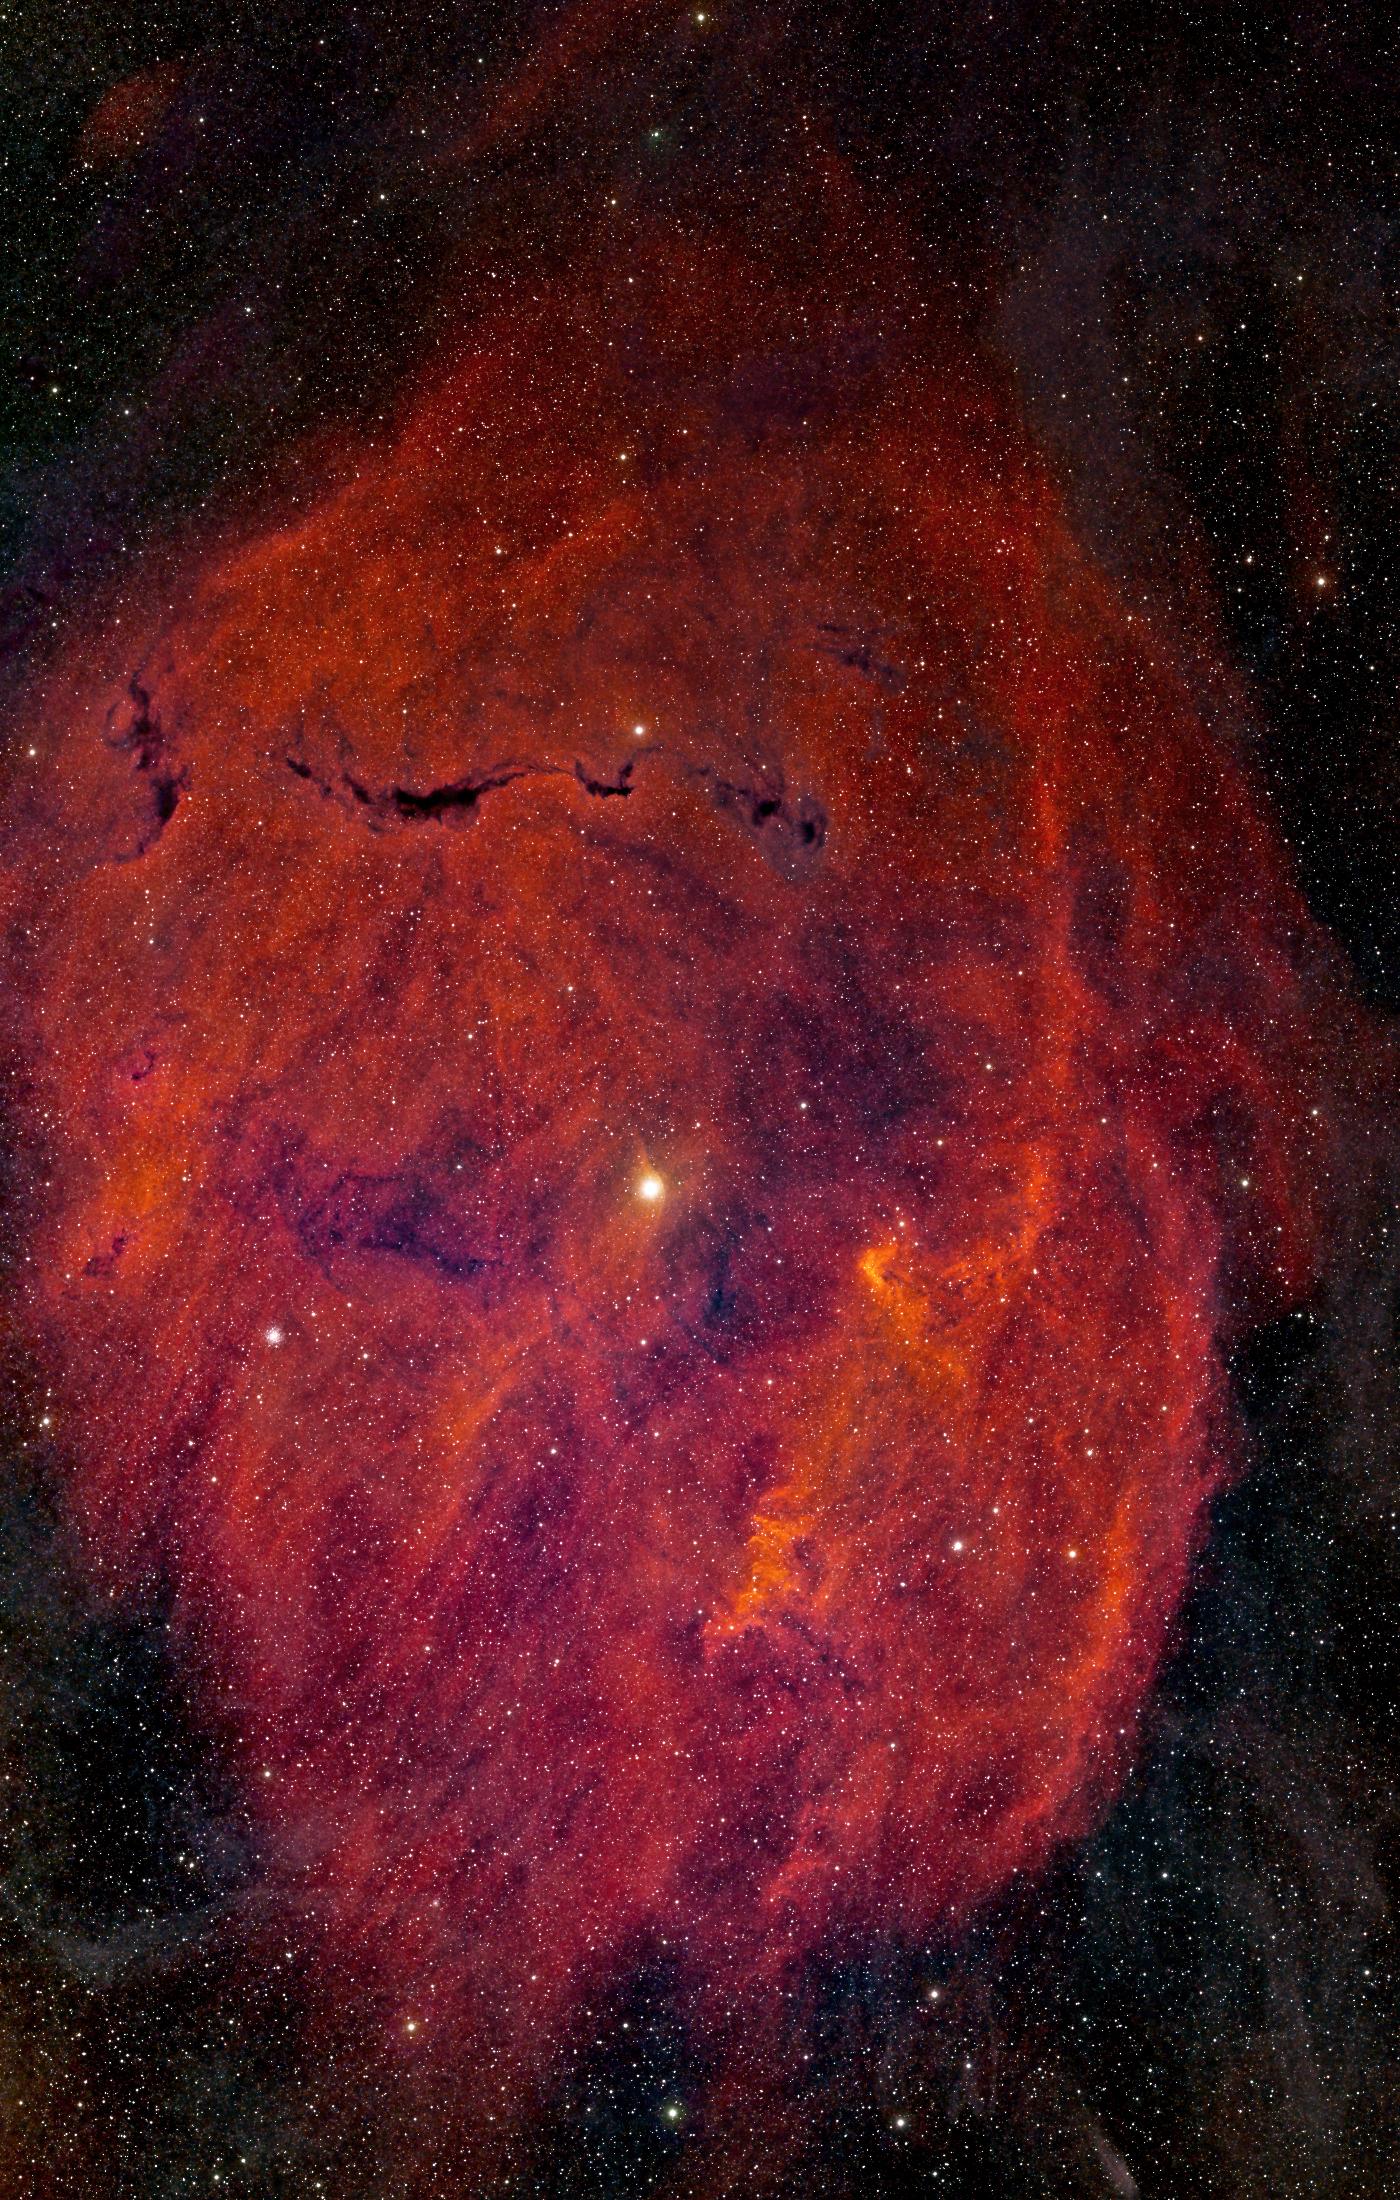 SH2-27 (Zeta Ophiuchi Nebula) in H-alpha, blue continuum and red continuum